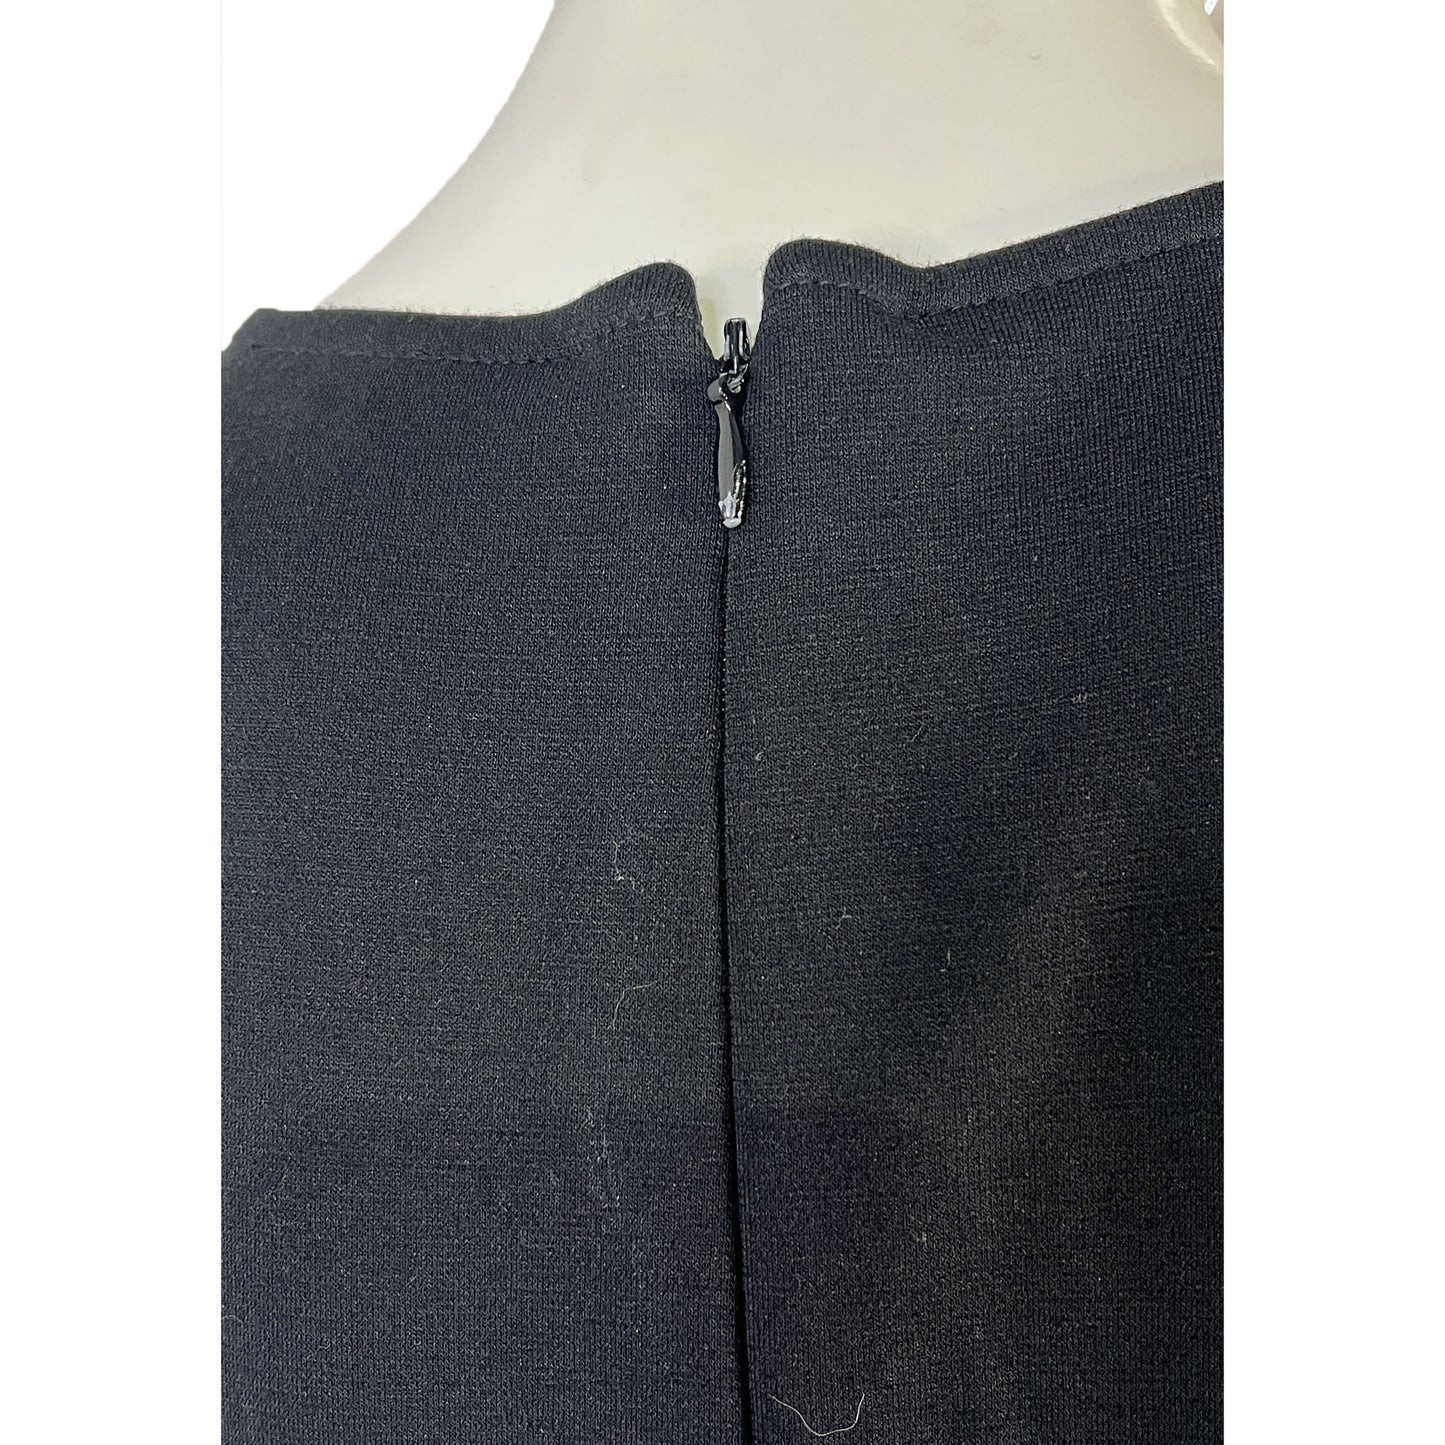 Ann Taylor Dress Sleeveless Above-Knee Black Size 6 SKU 000066-1